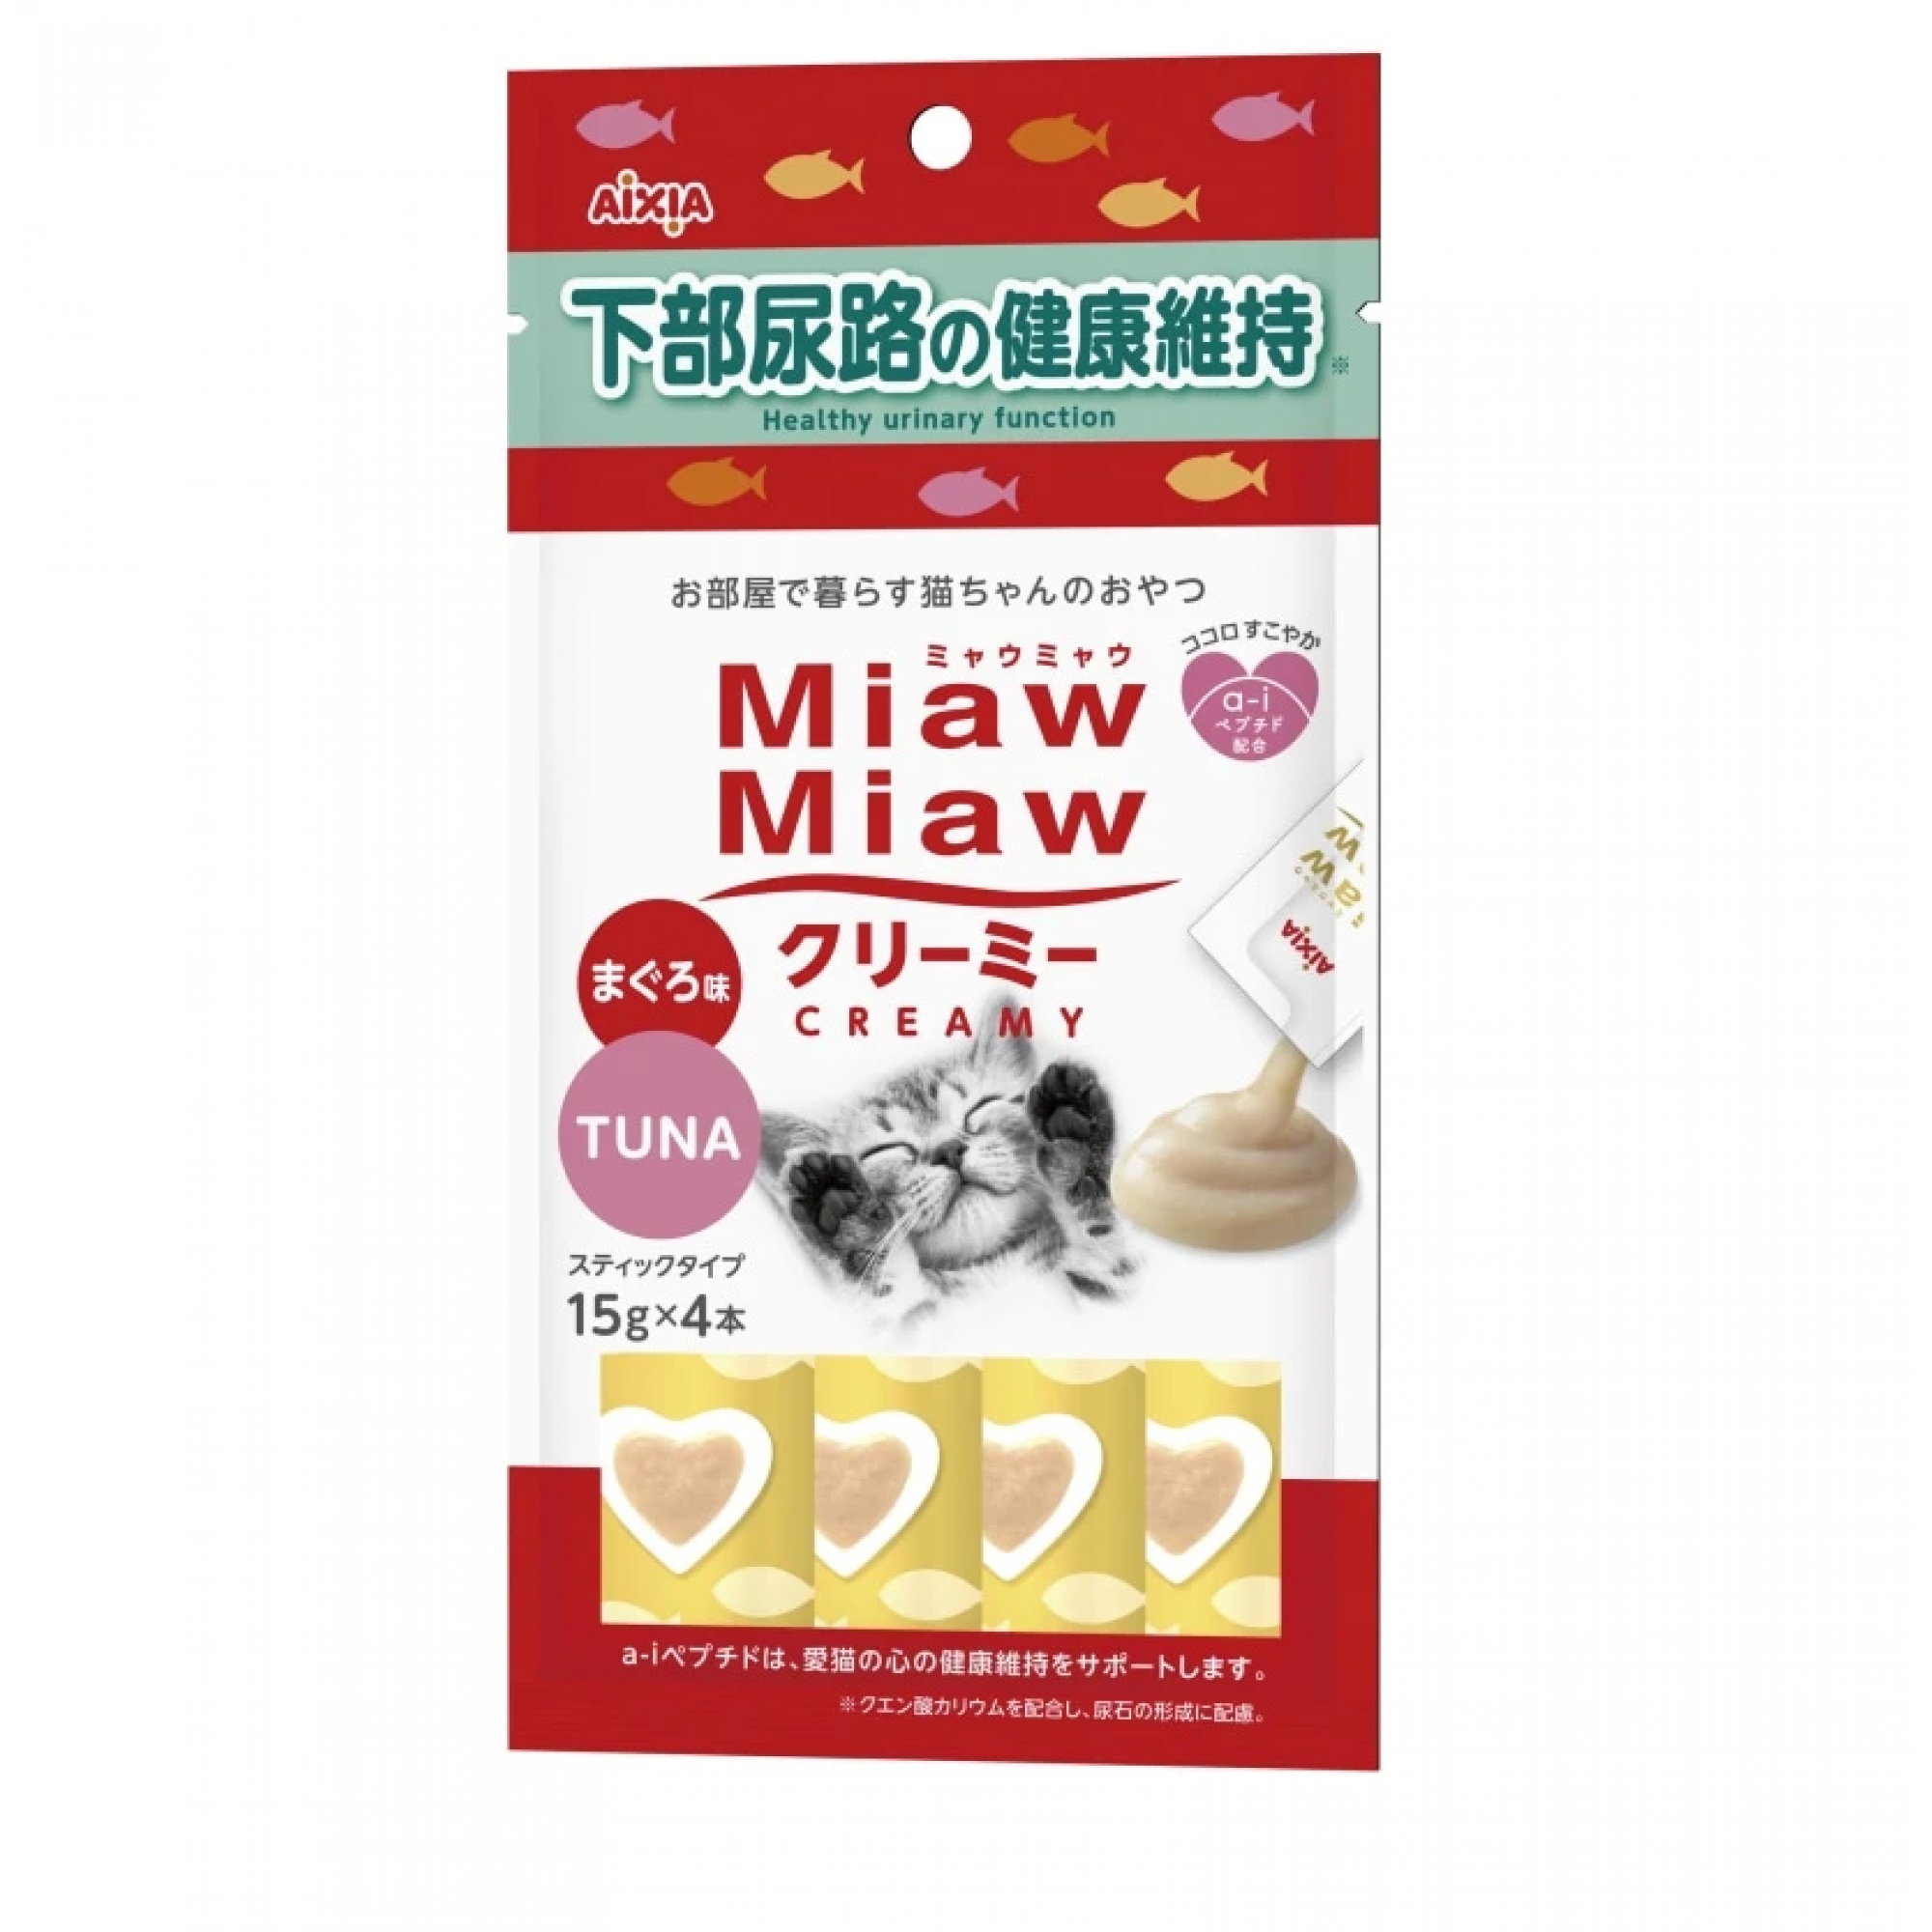 Aixia Miaw Miaw Creamy - Tuna Healthy Urinary Function 15g x 4pcs